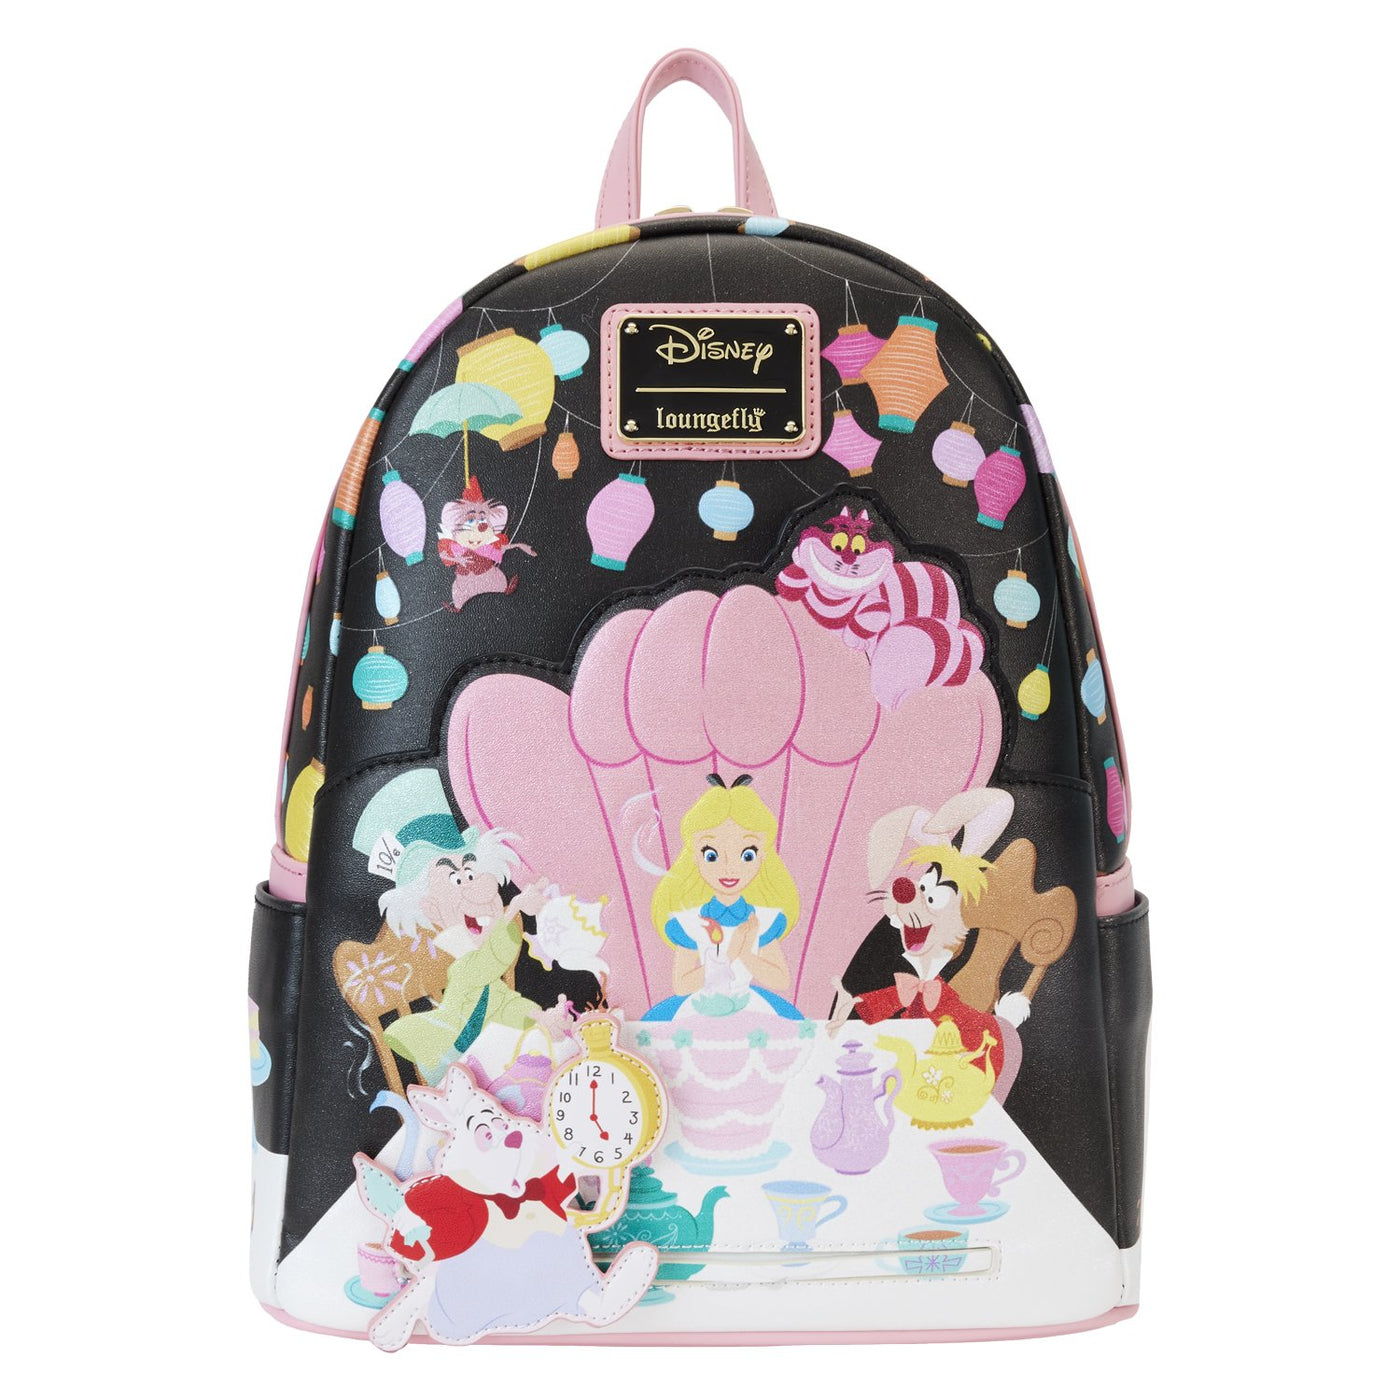 Loungefly Disney Alice in Wonderland Unbirthday Party Mini Backpack - Sliding White Rabbit